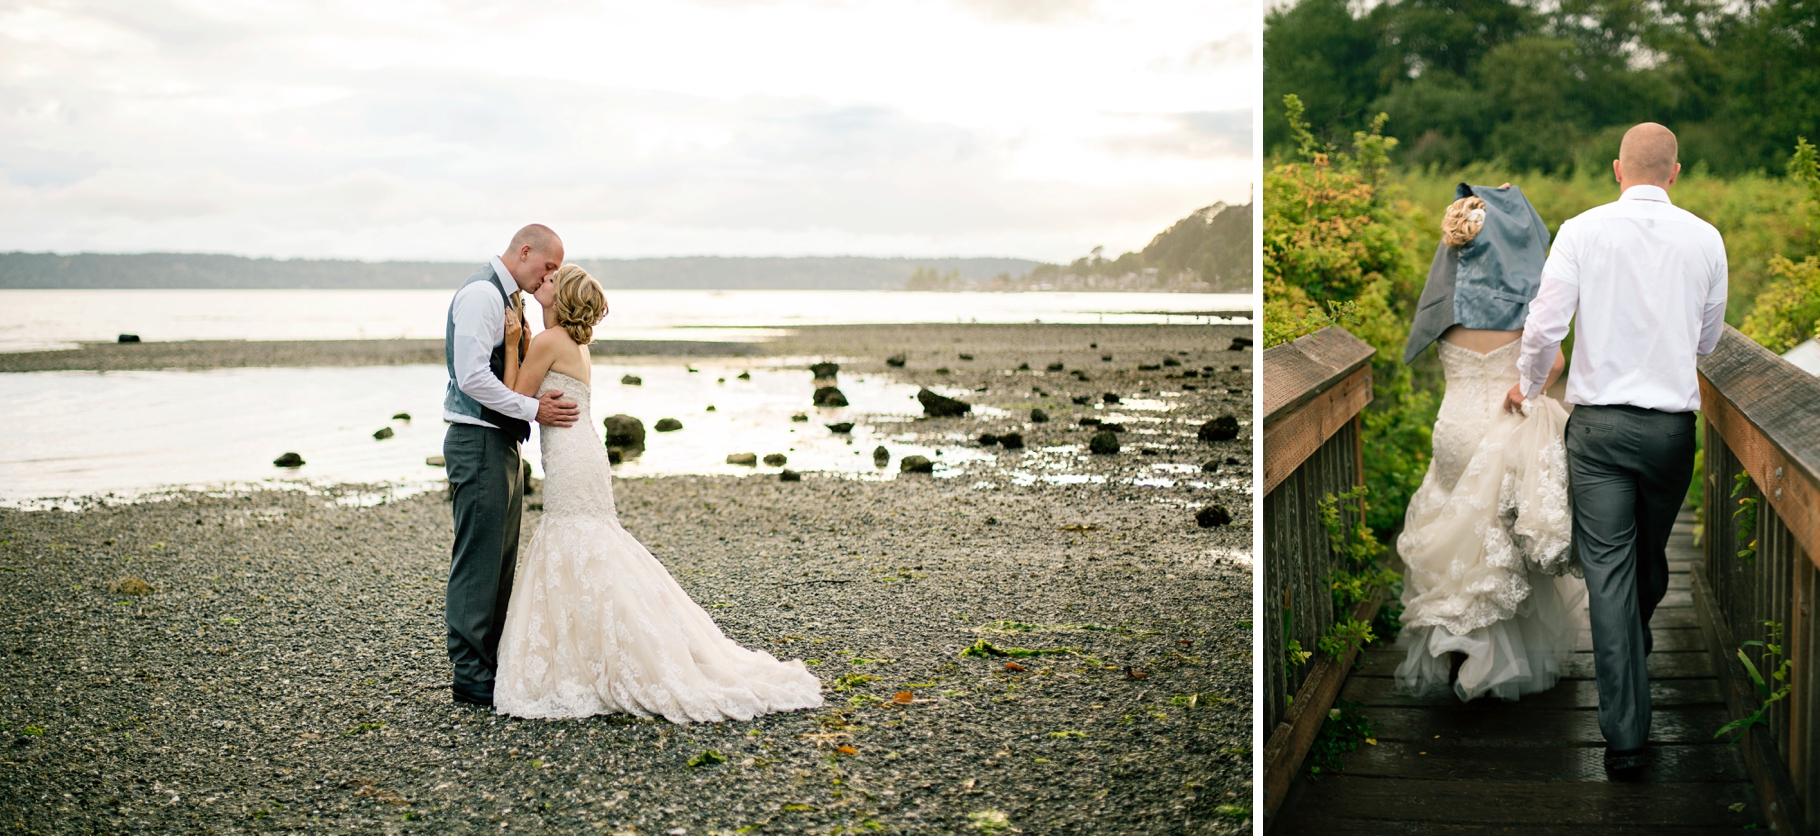 47-Normandy-Cove-Beach-Wedding-Photographer-Bride-Groom-Romantic-Rain-Sunset-Seattle-Wedding-Photography-Northwest